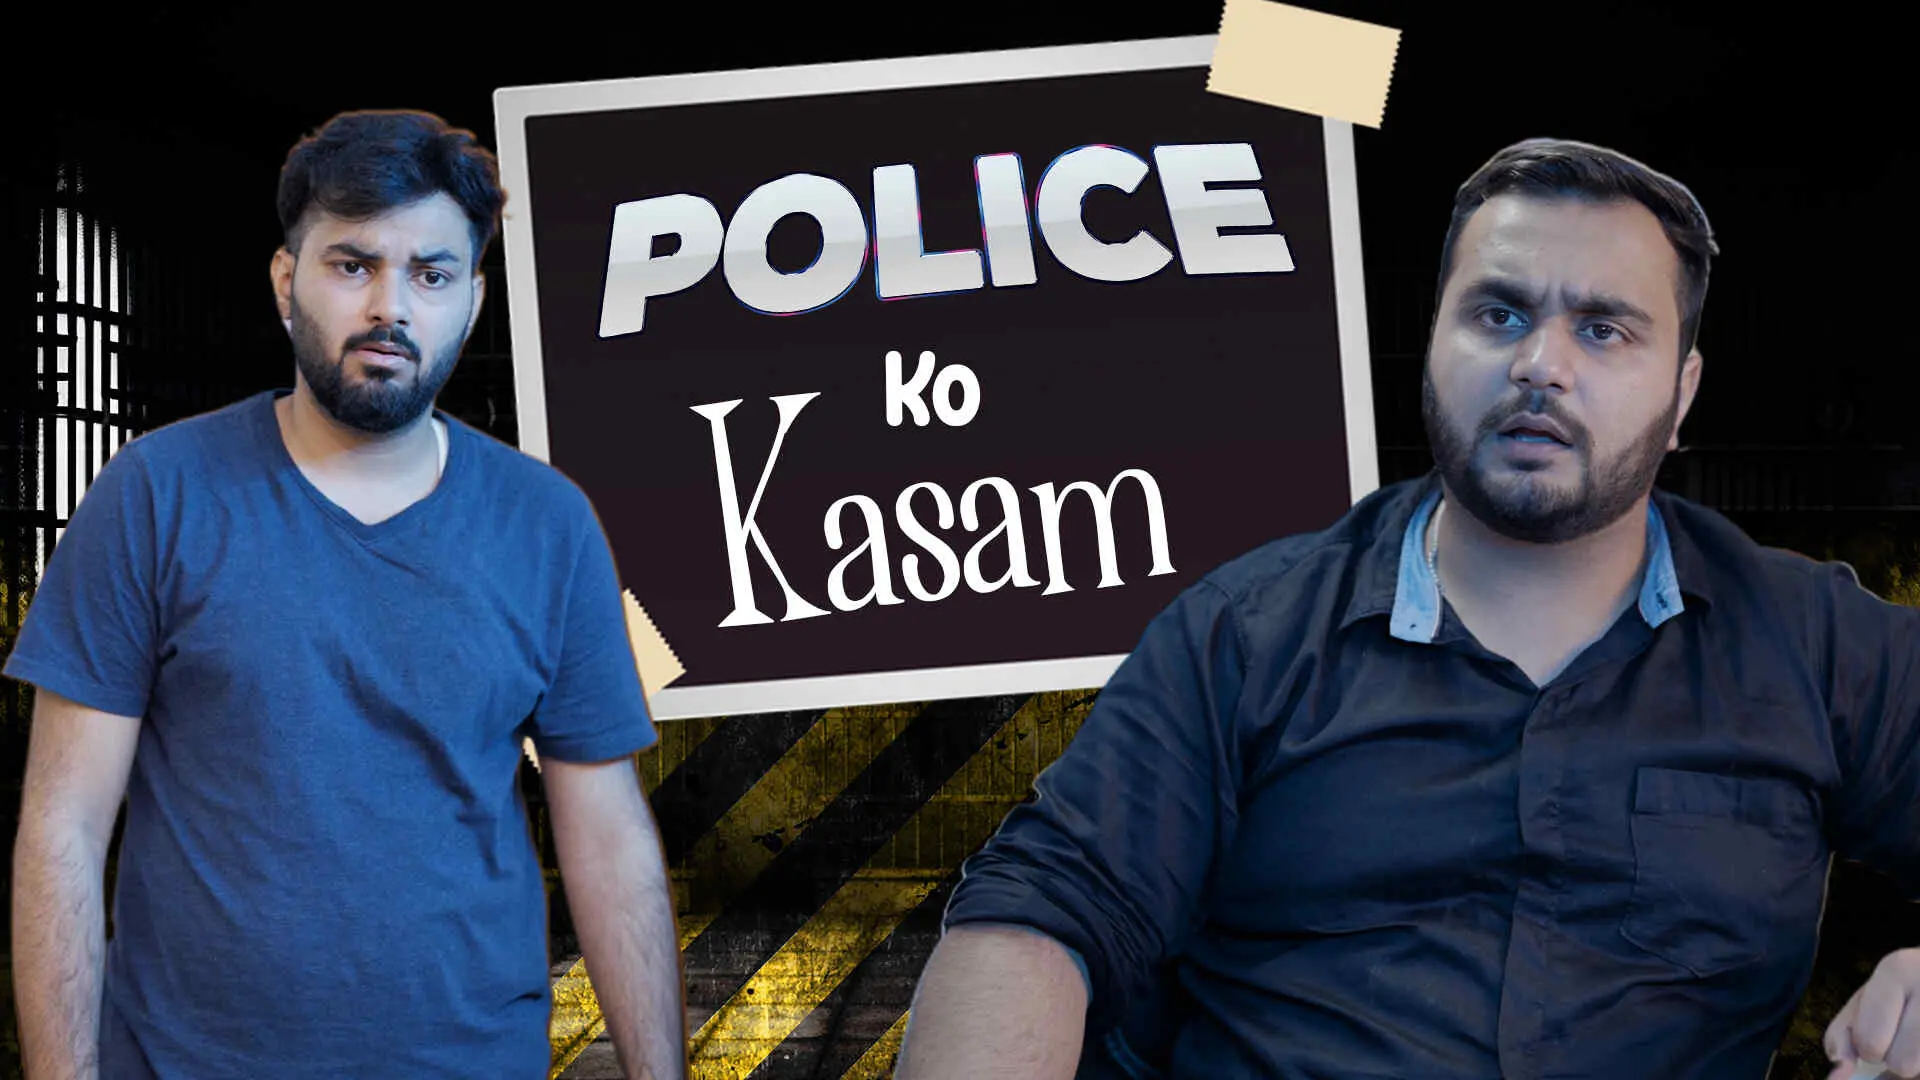 Police Ko Kasam